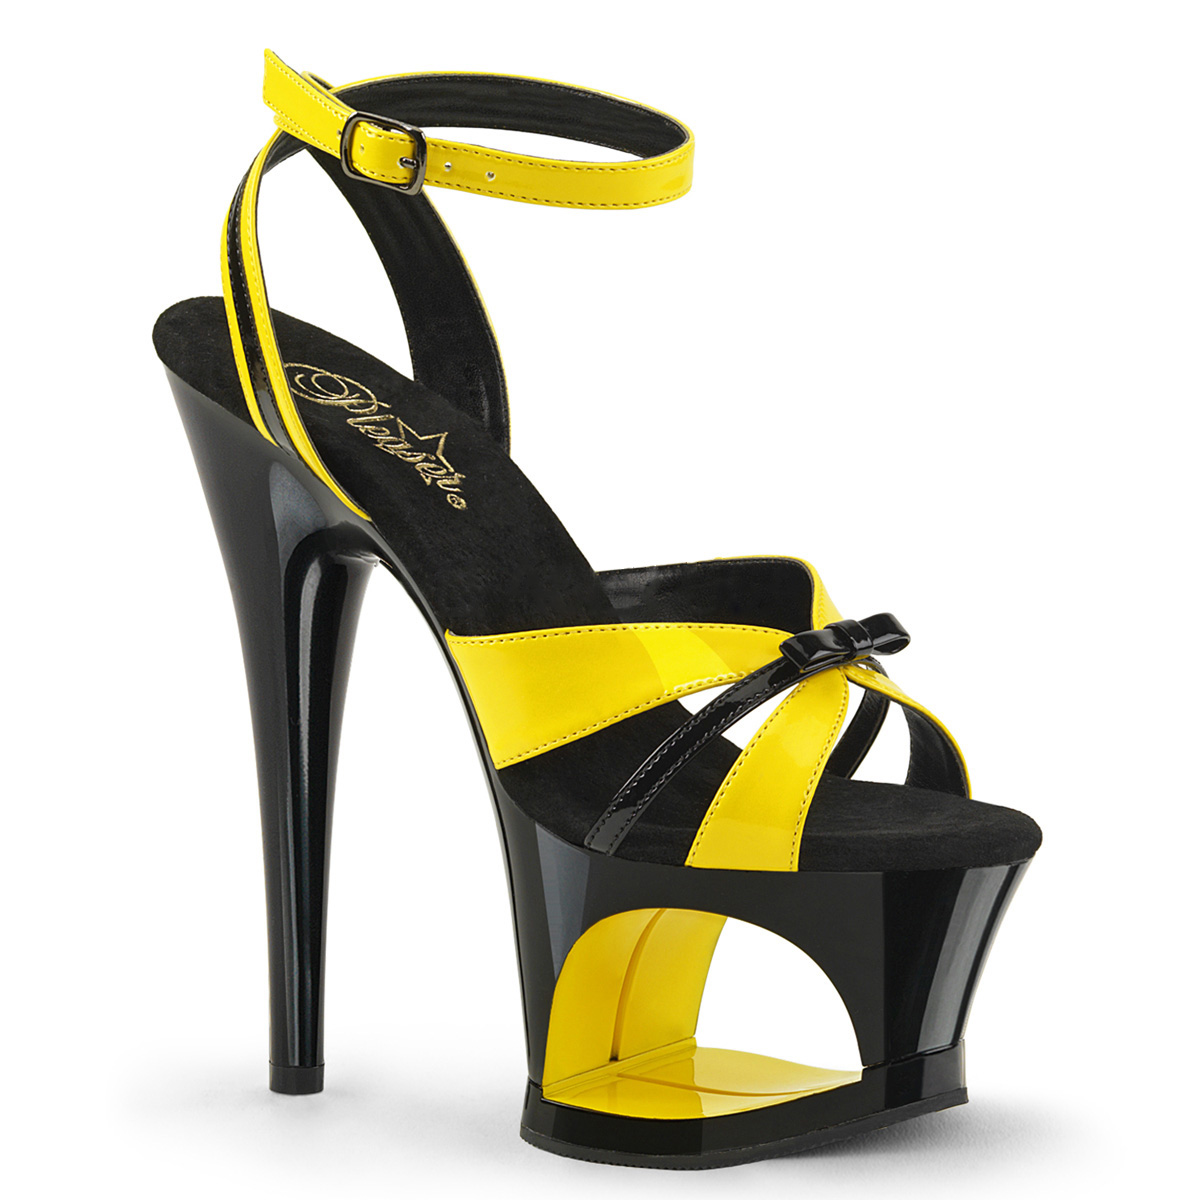 yellow colour heels